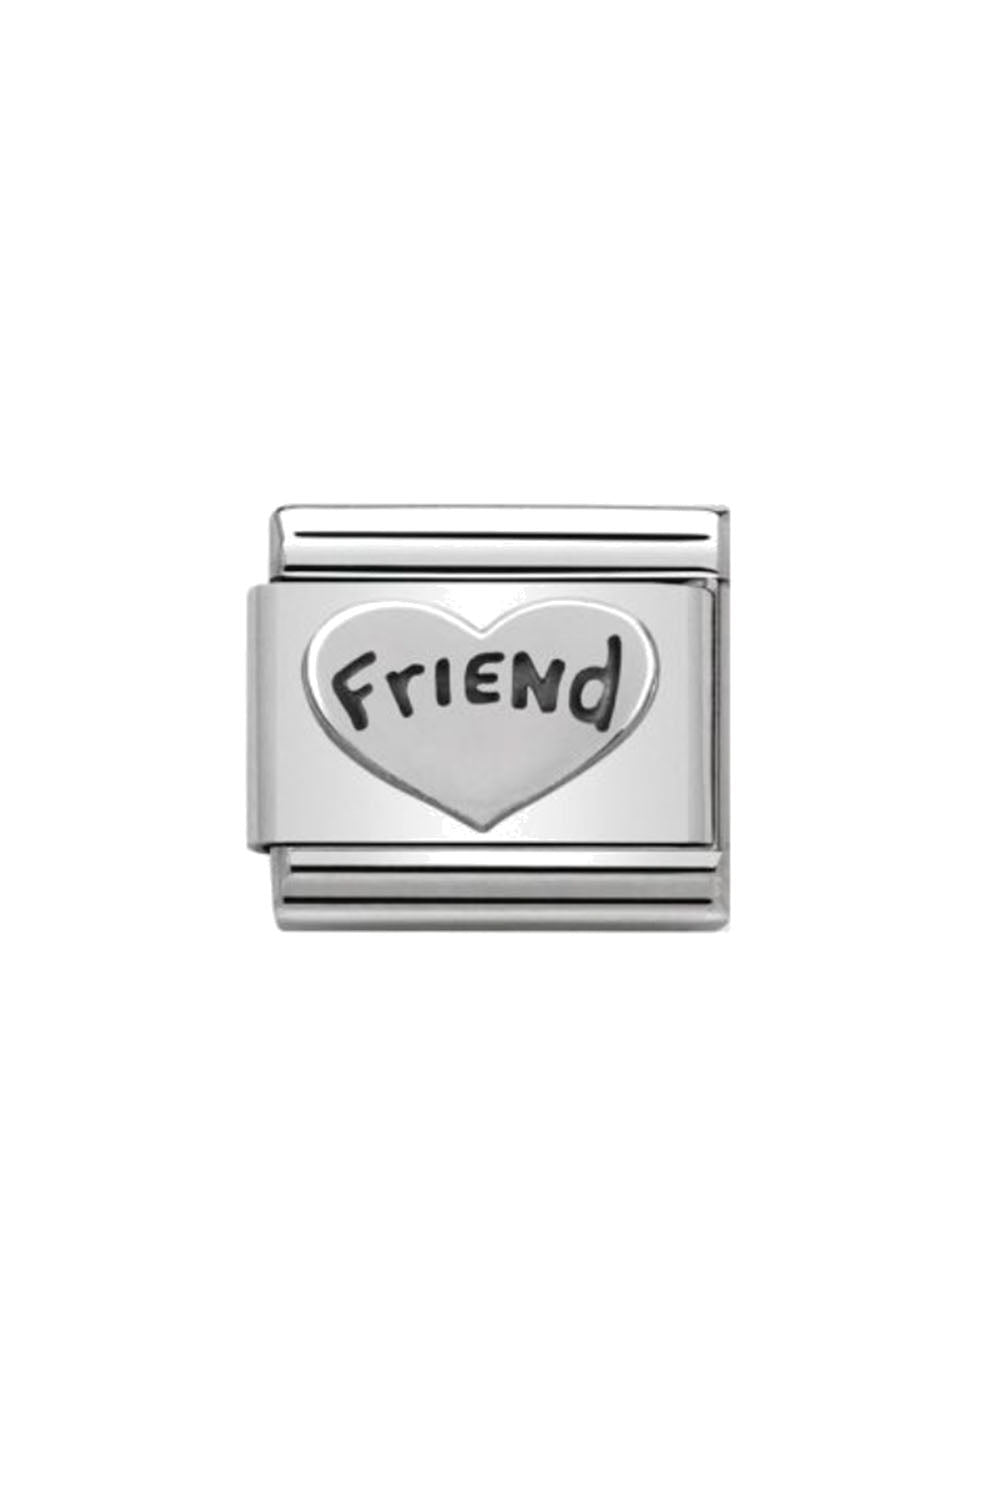 Oxidised Symbol 925 Sterling Silver Friend Heart